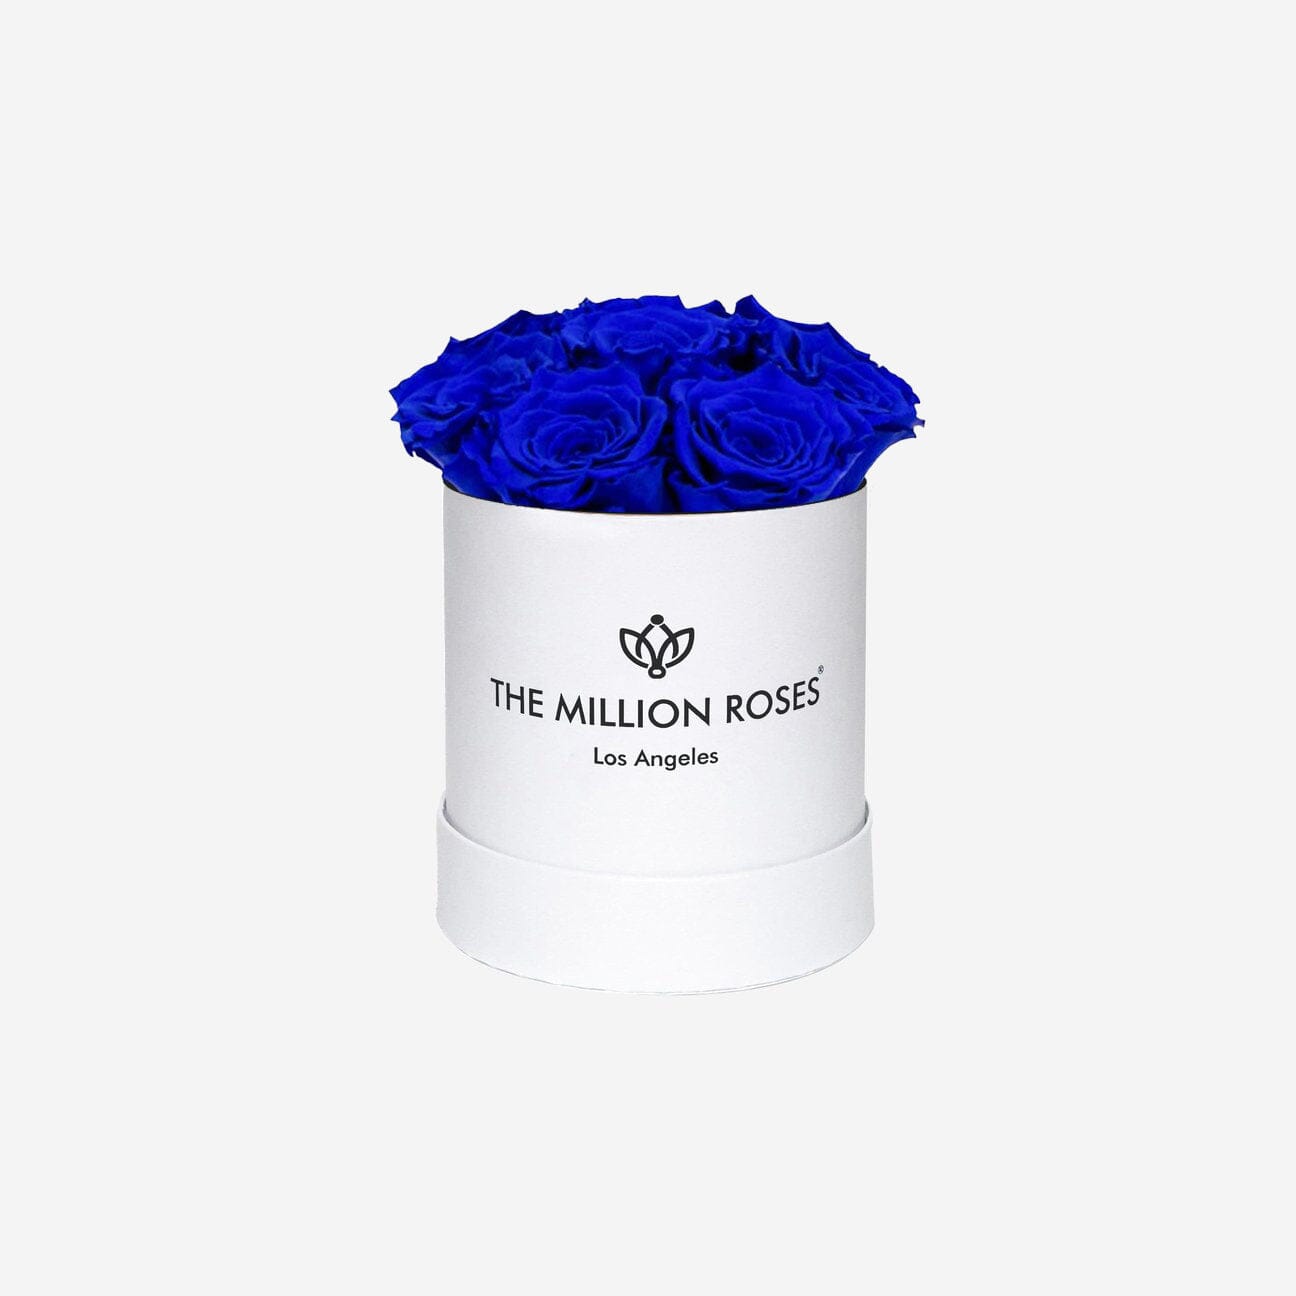 Basic White Box | Royal Blue Roses - The Million Roses